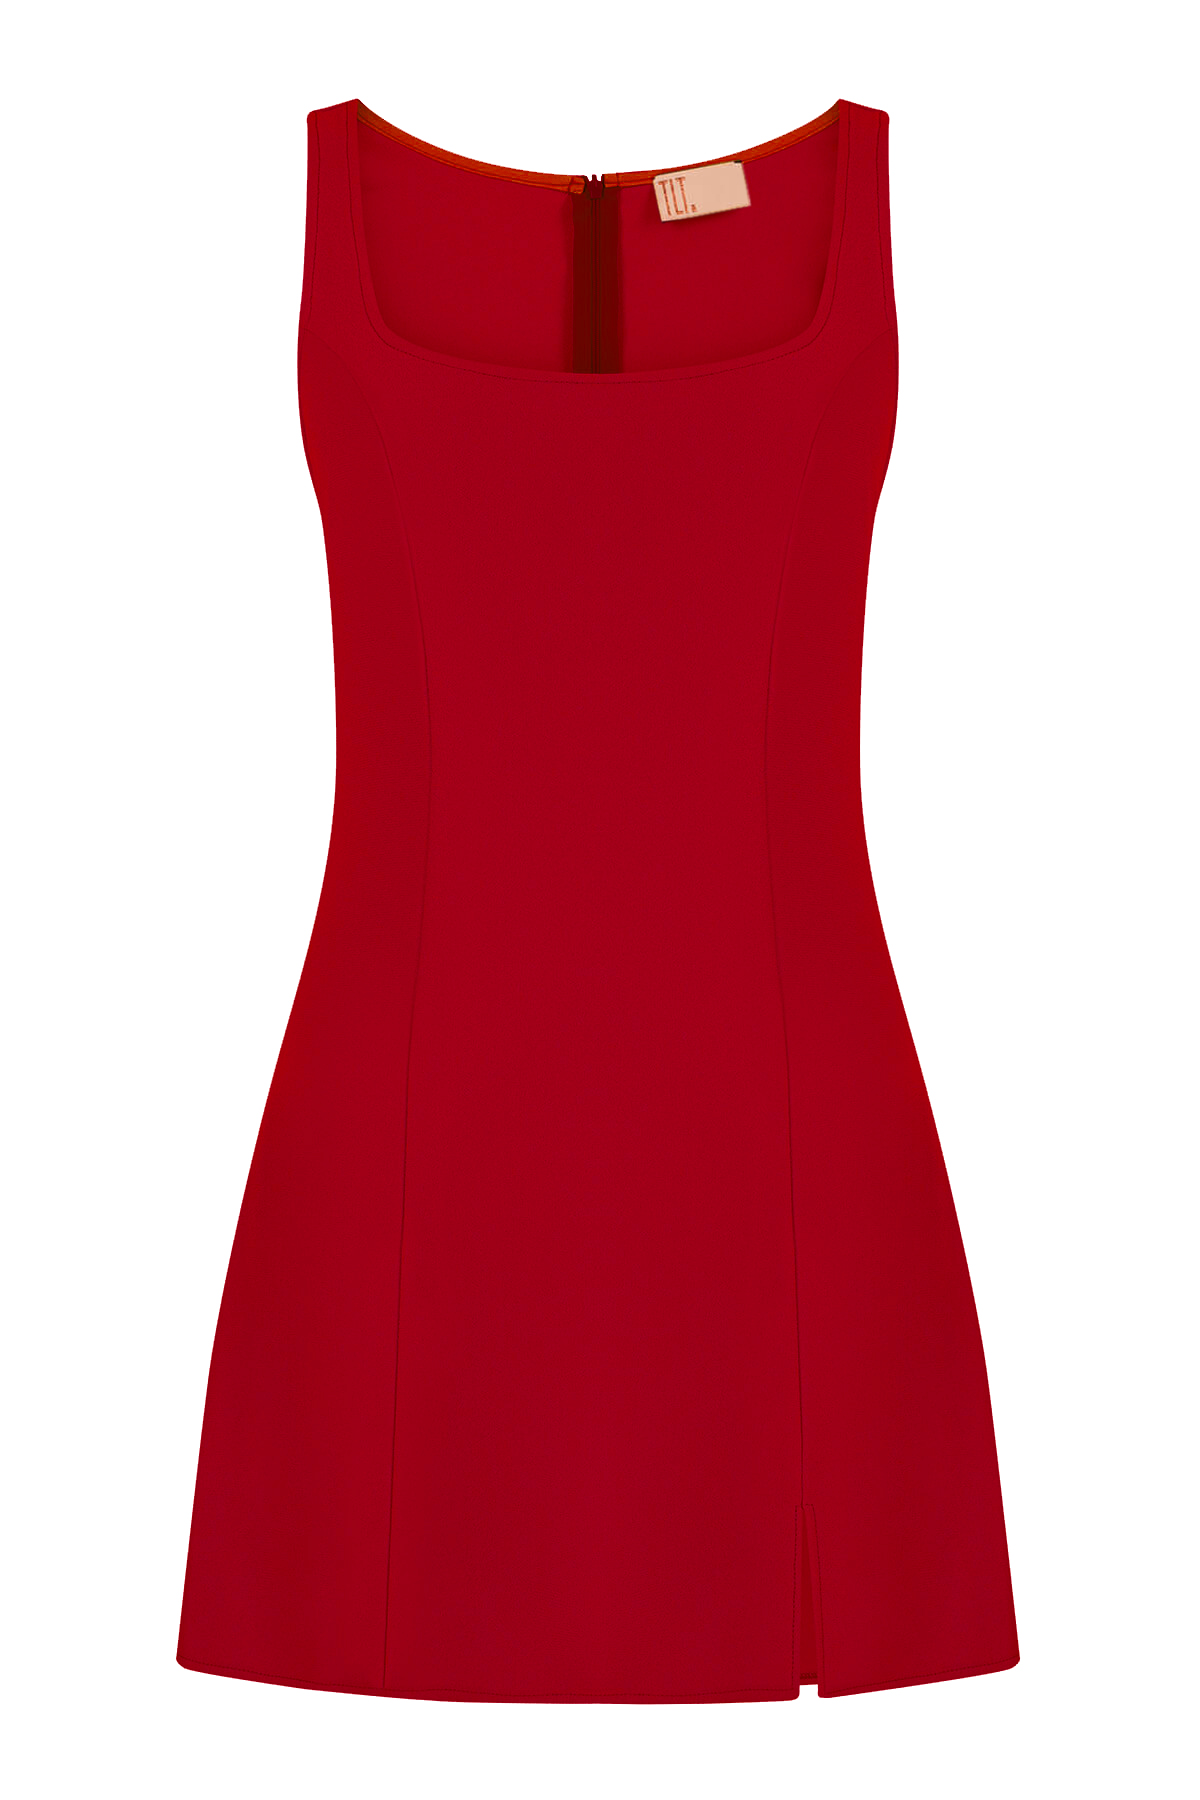 BARBIE Krep Kırmızı Mini Atlet Elbise